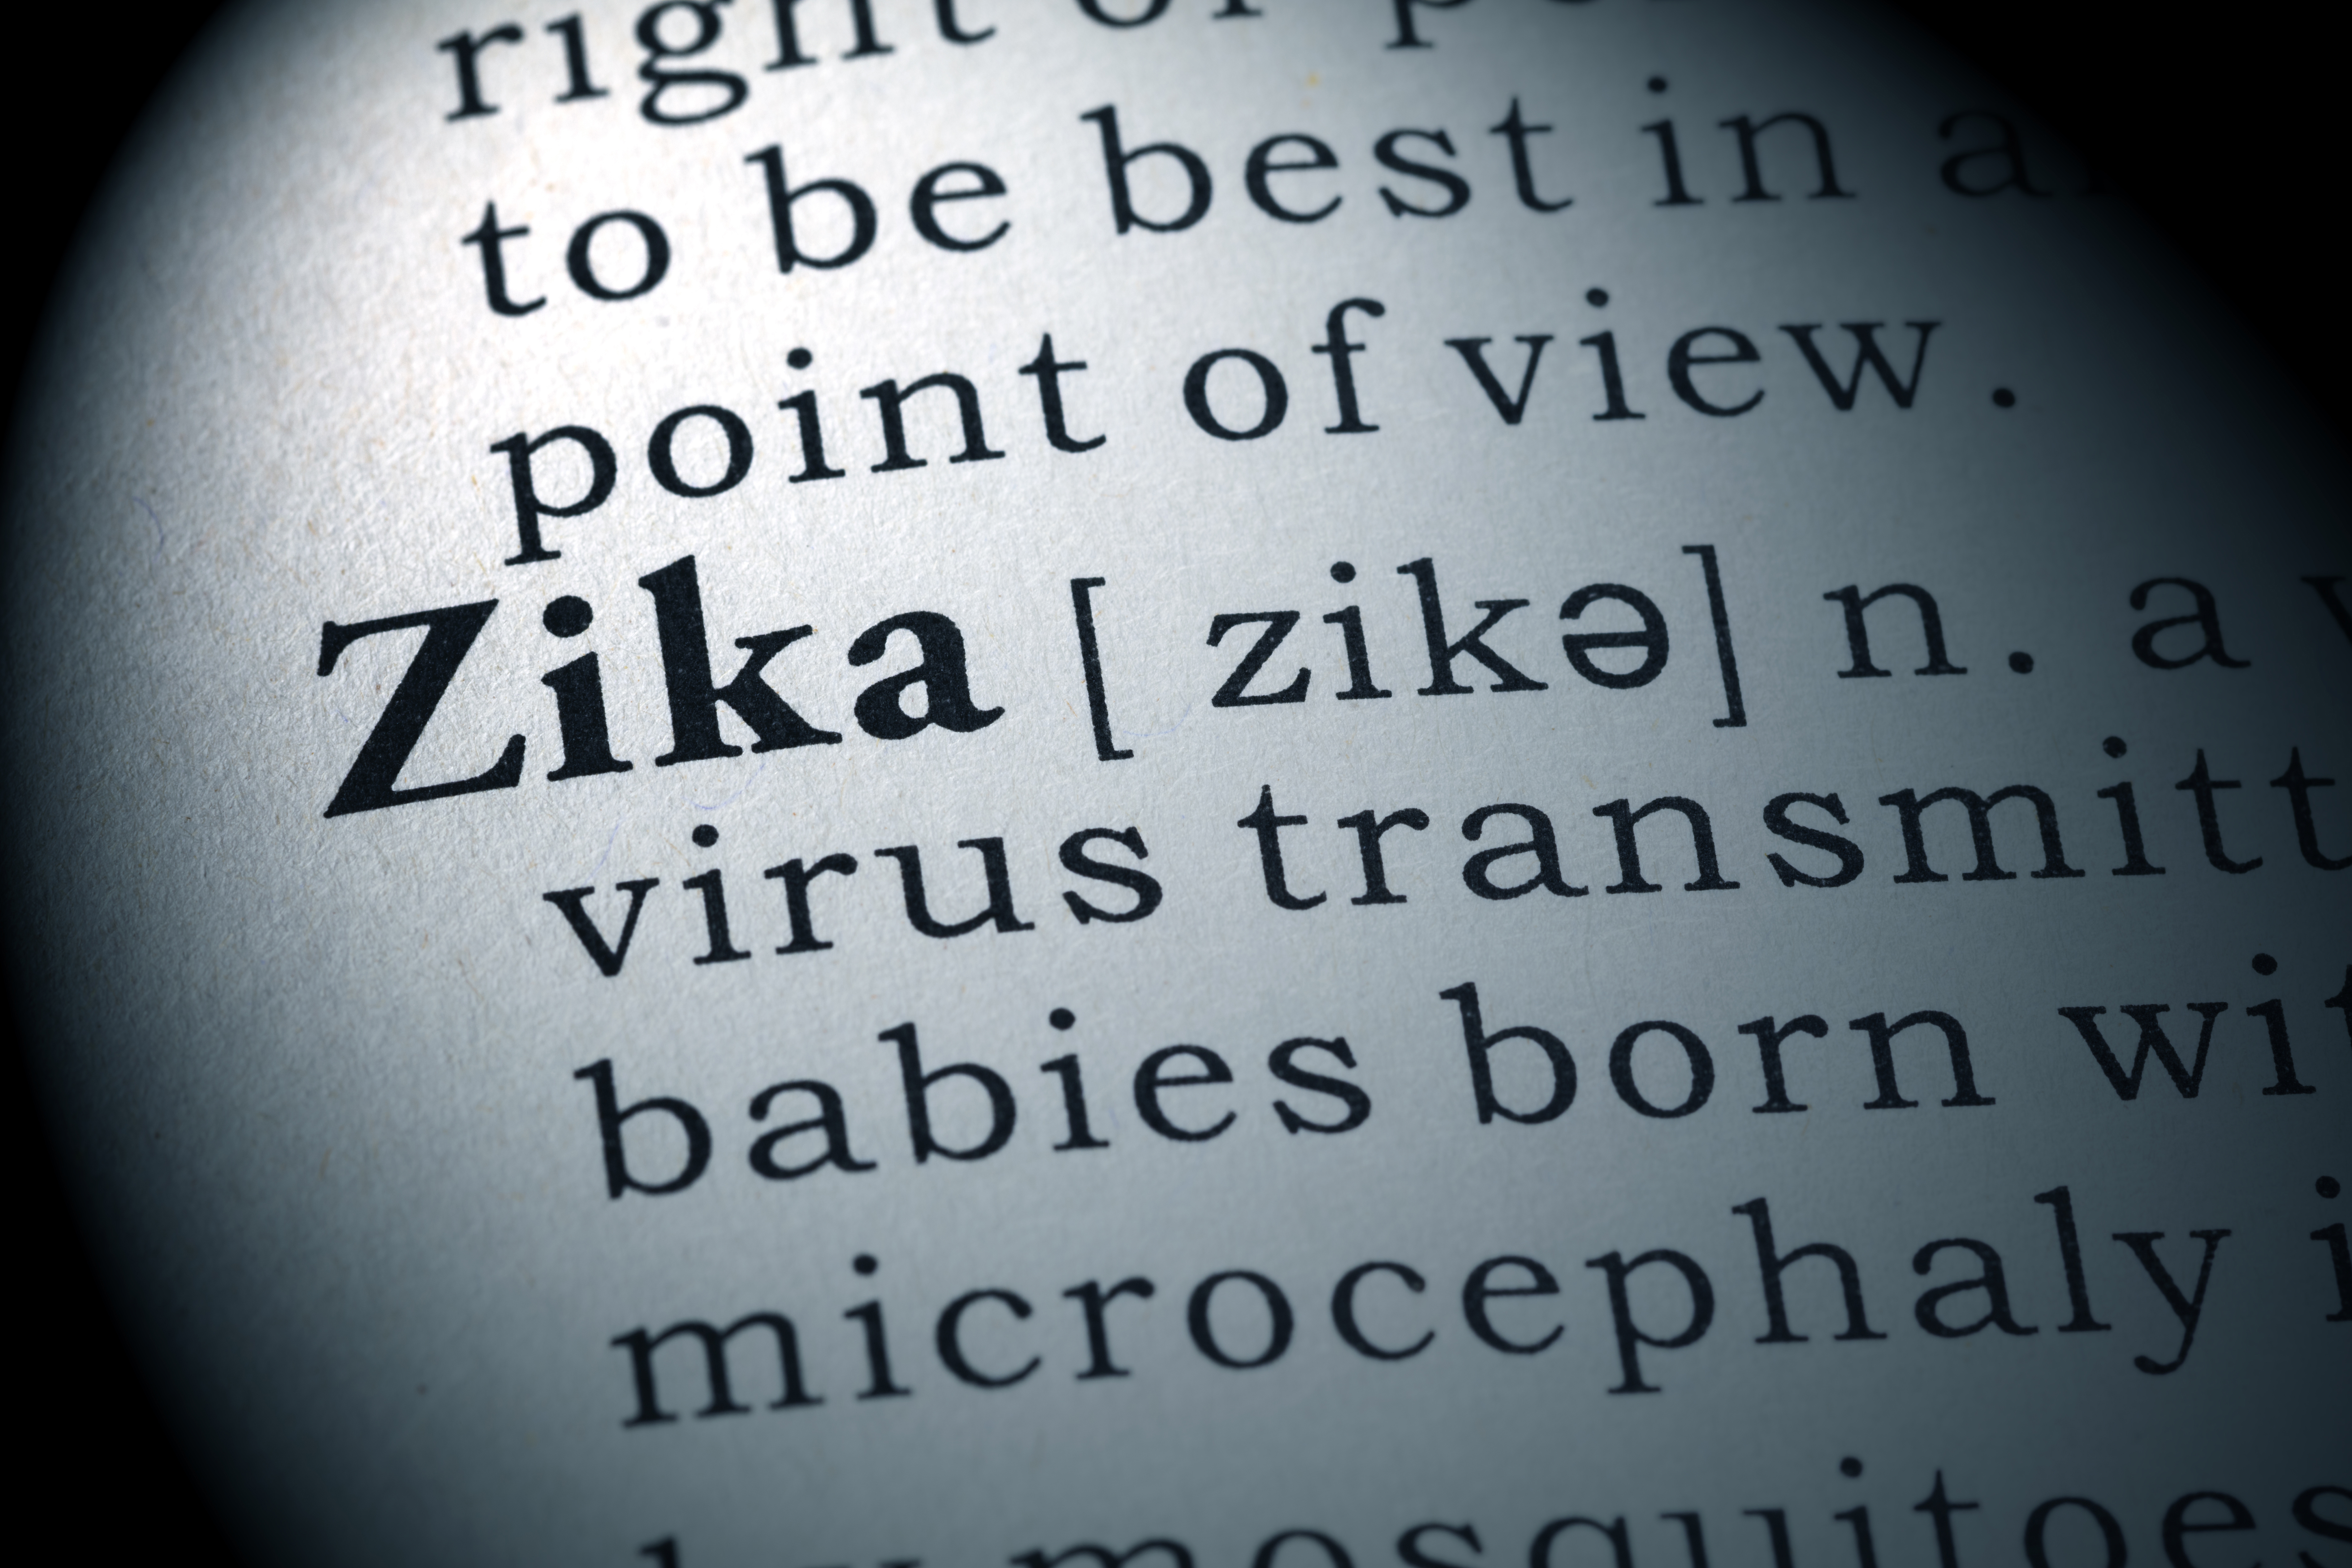 BioLytical Laboratories Patents New Zika Virus Detection Method